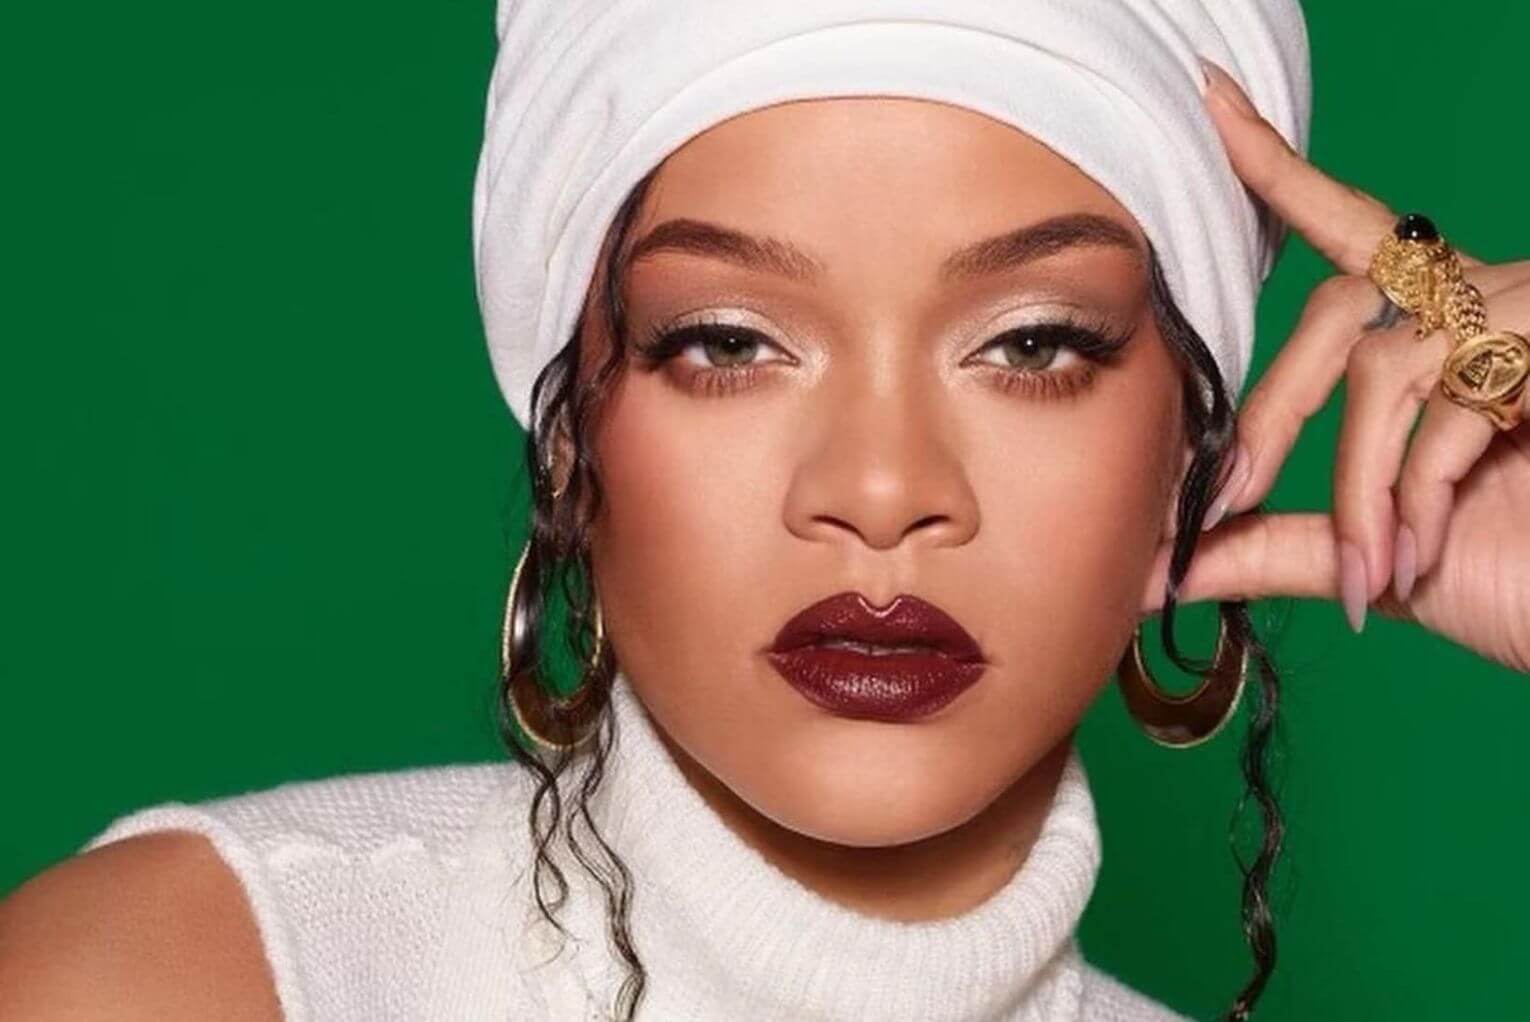 Rihanna: The Latest Celebrity to Mock Christianity